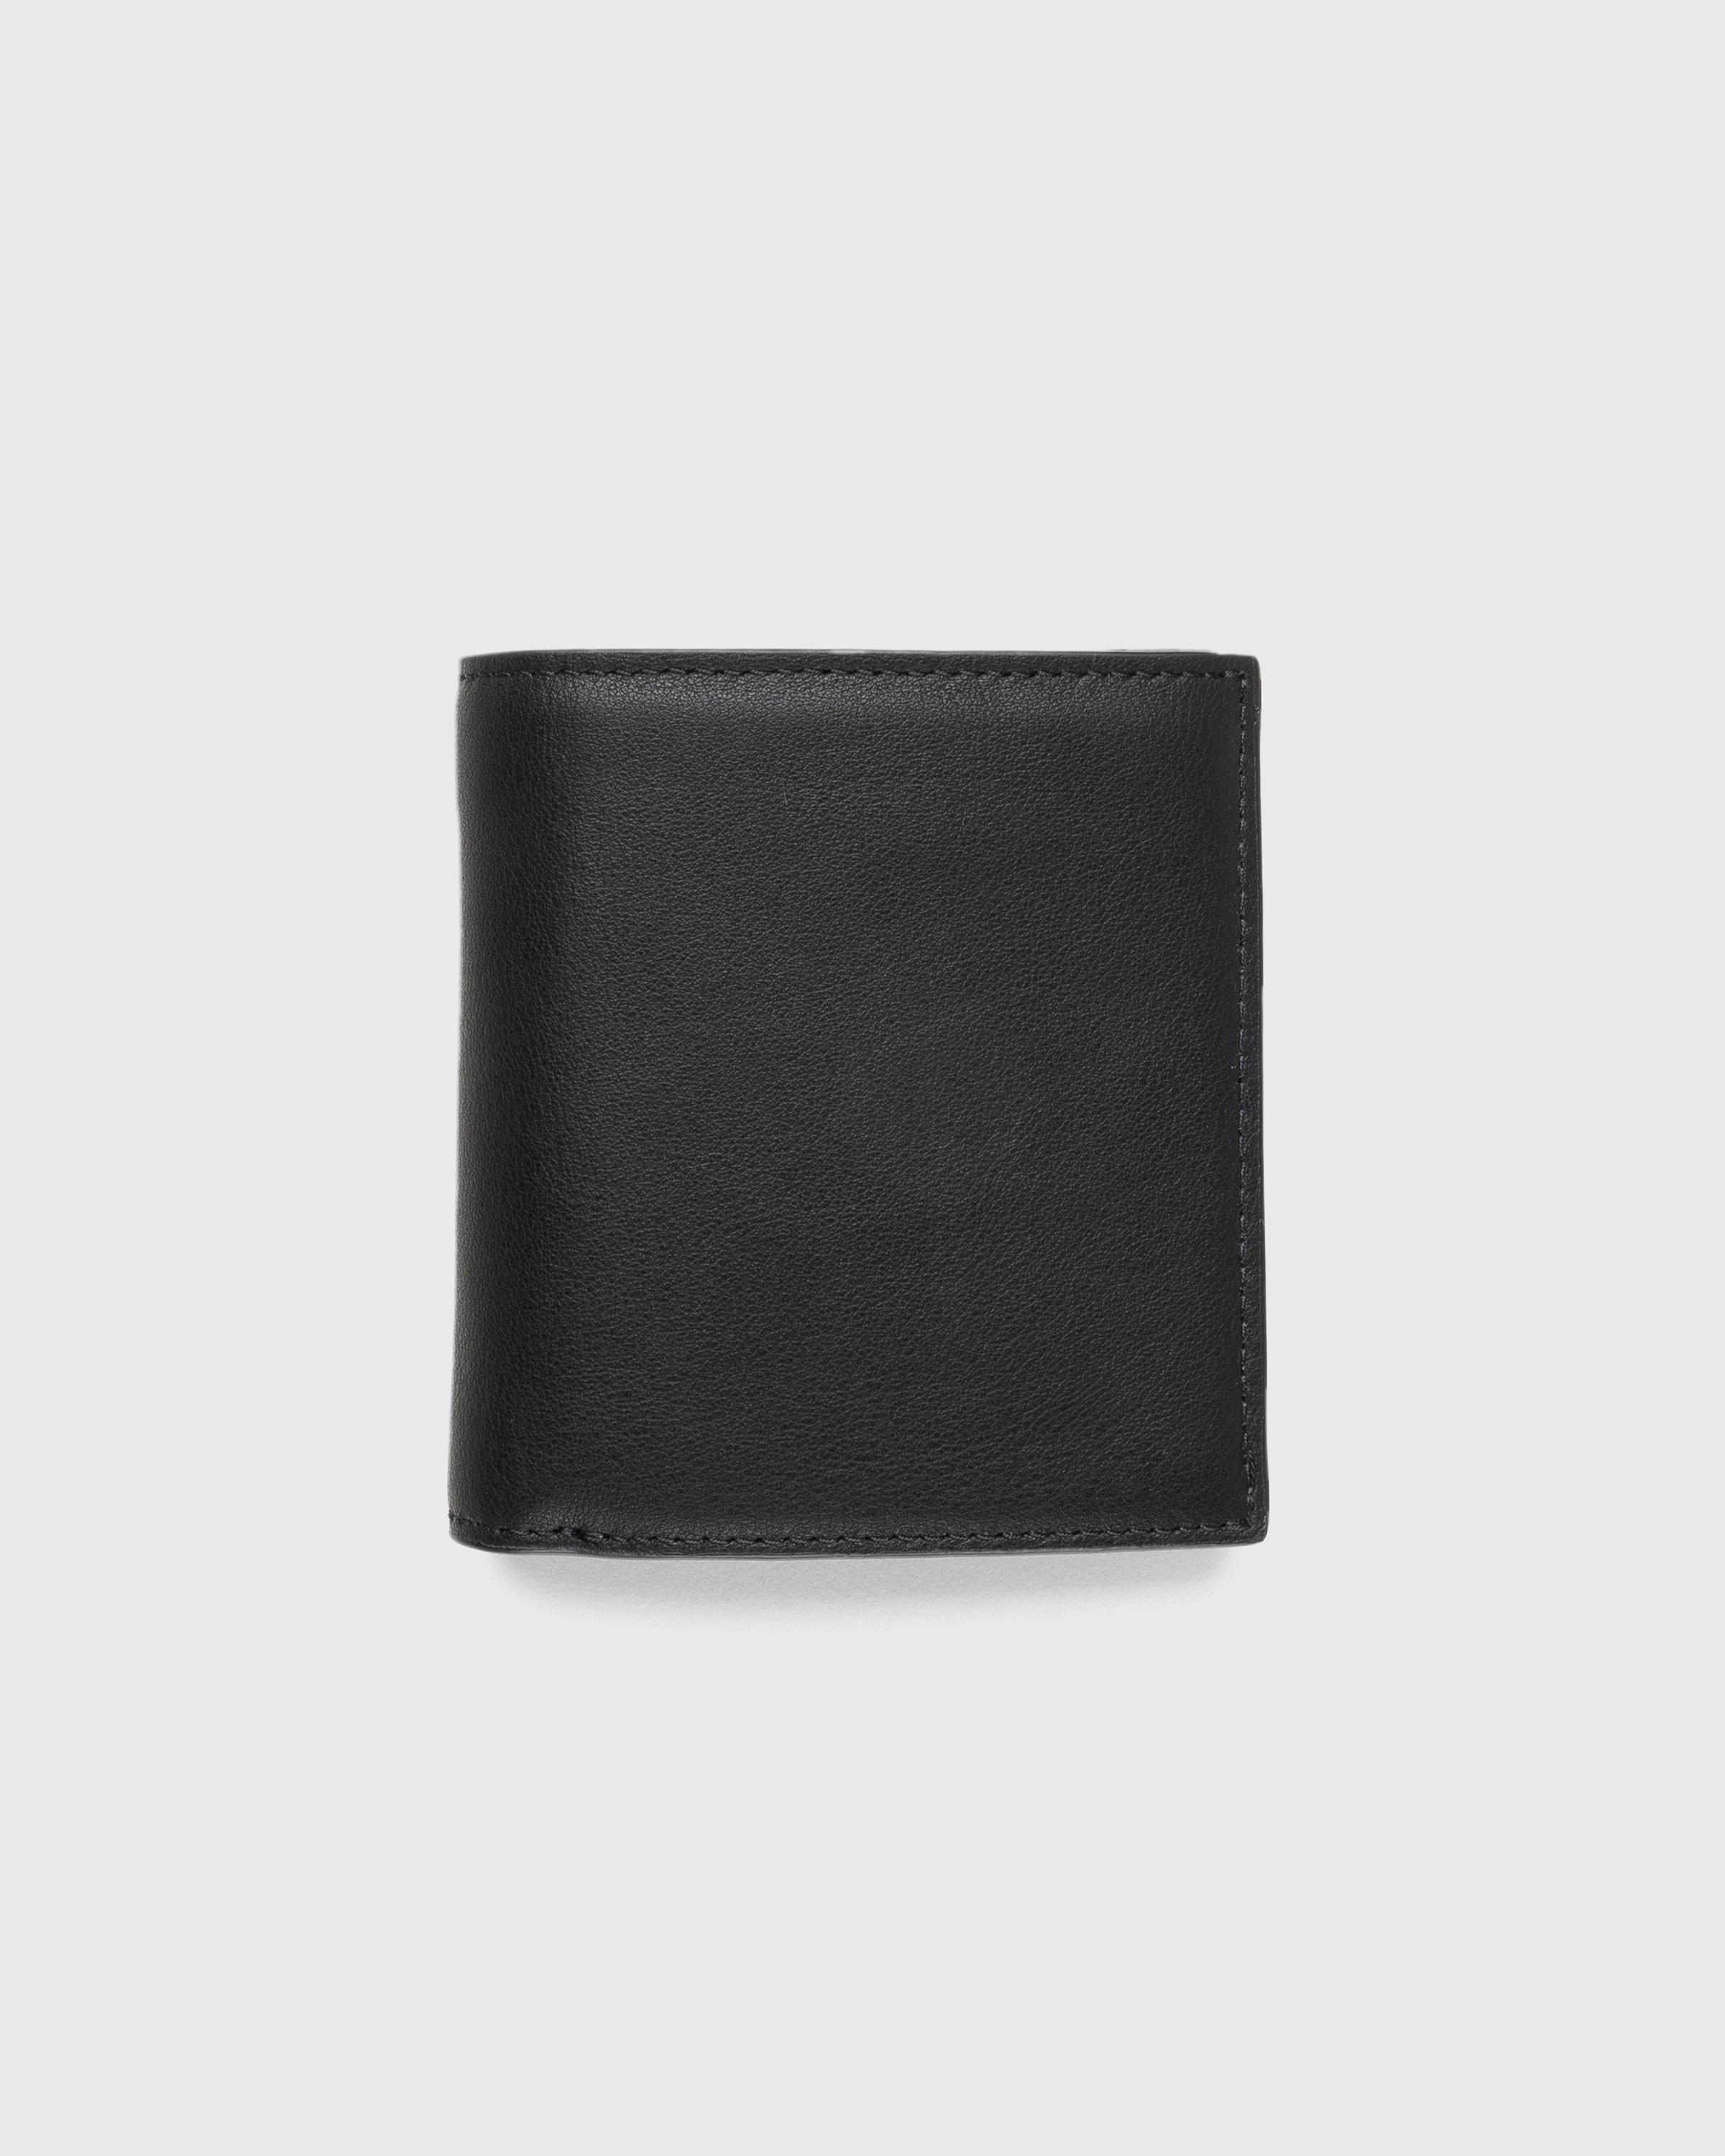 Kenzo - Crest Foldable Wallet Black - Accessories - Black - Image 3